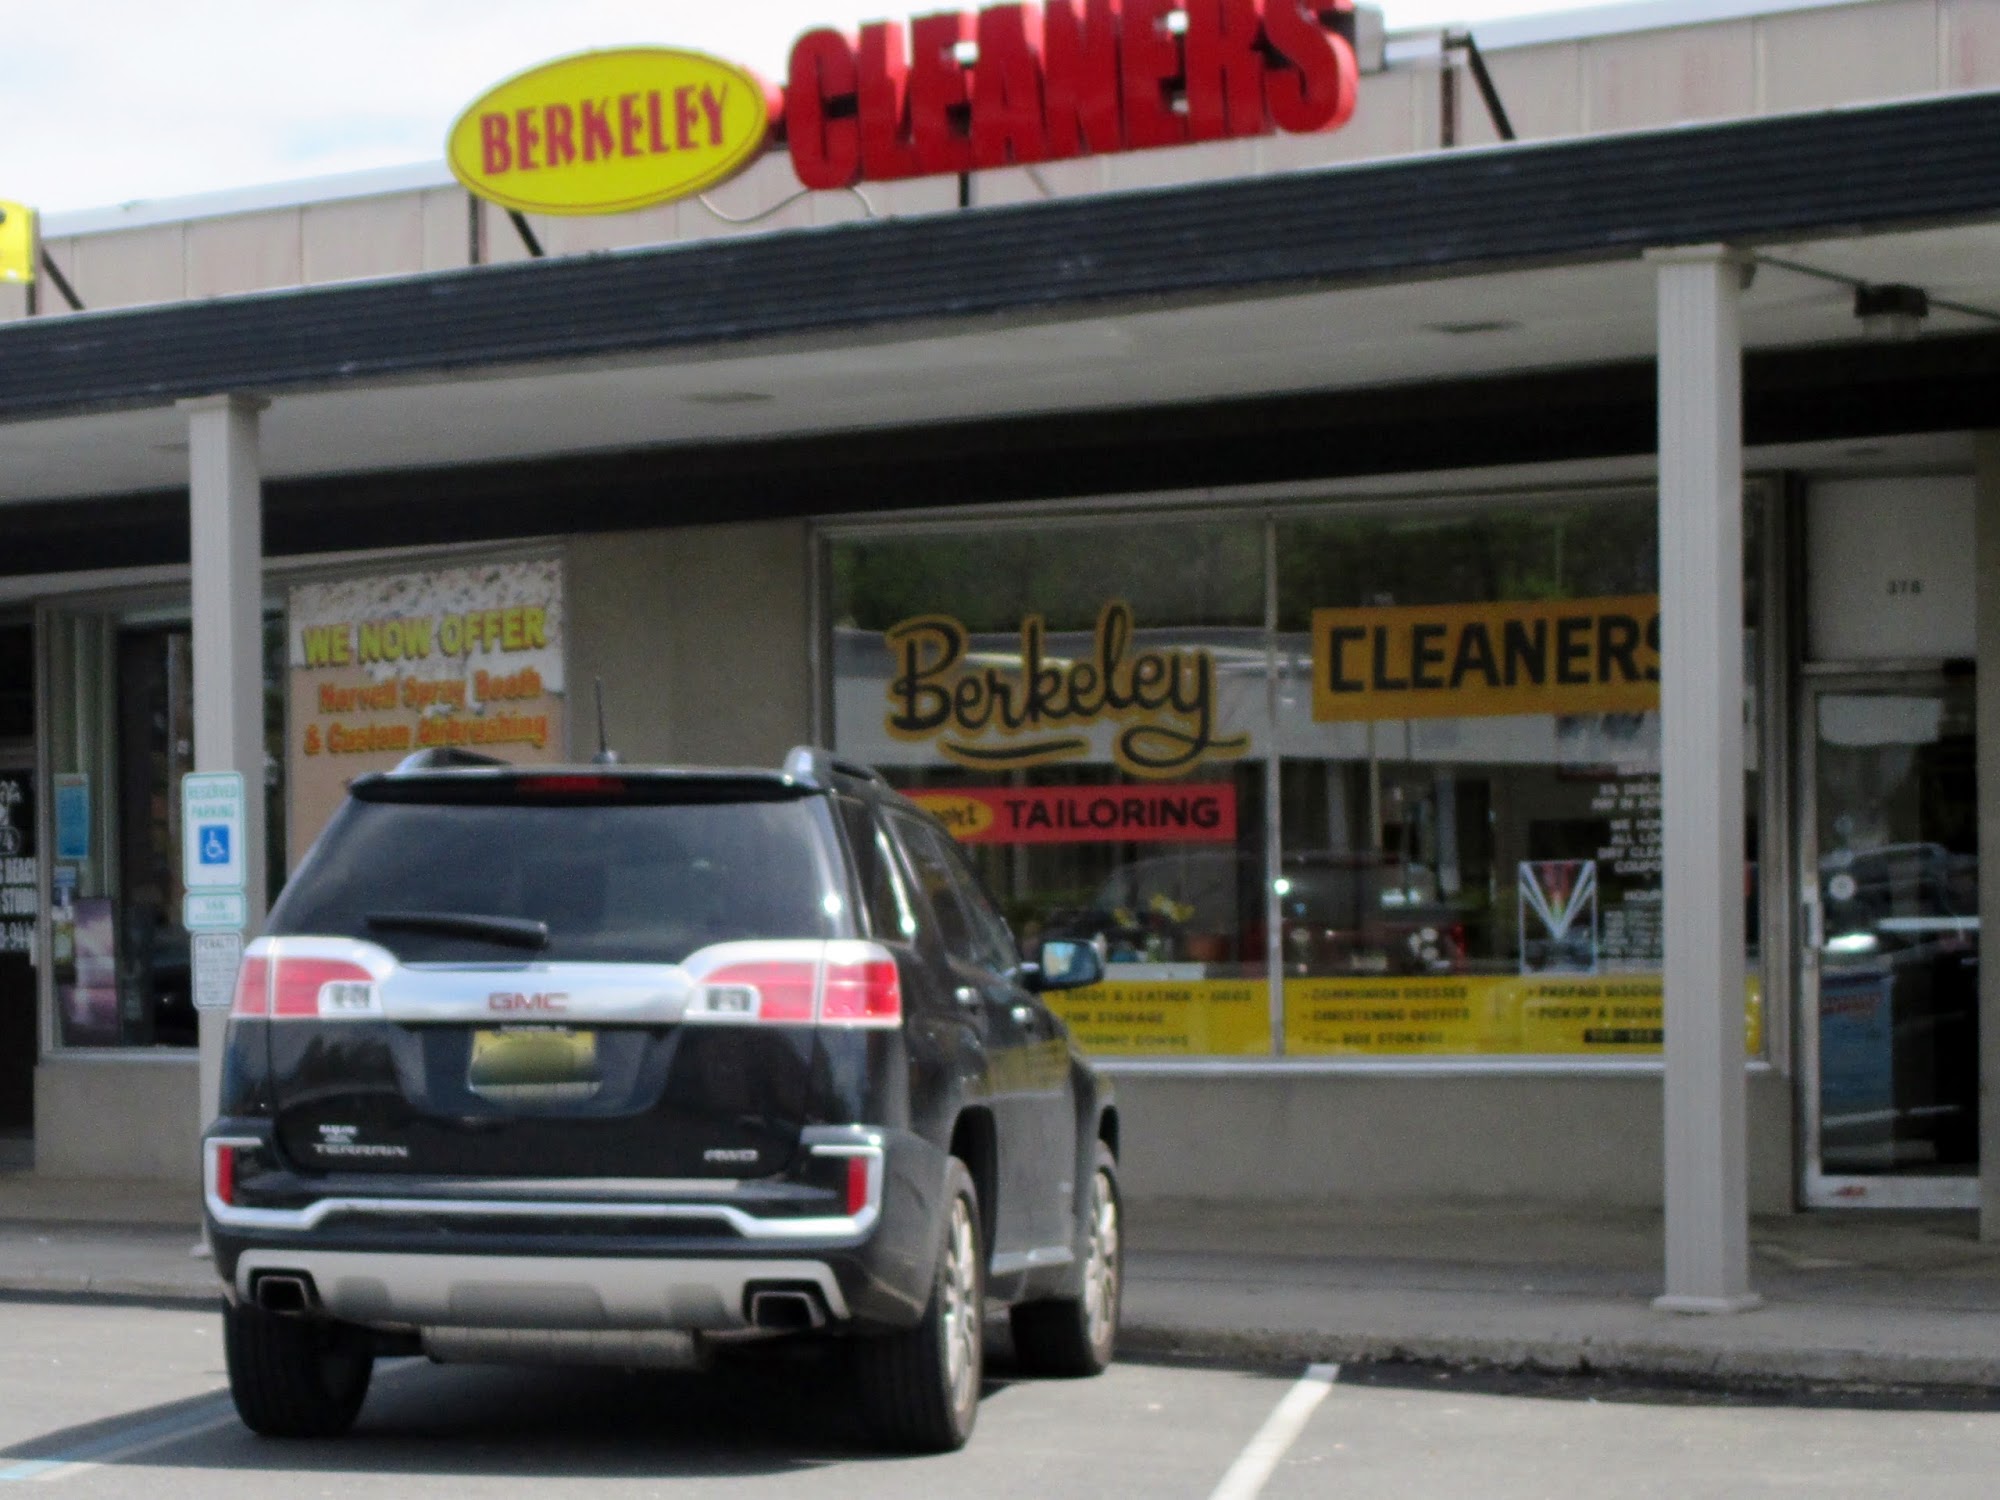 Berkeley Cleaners Inc